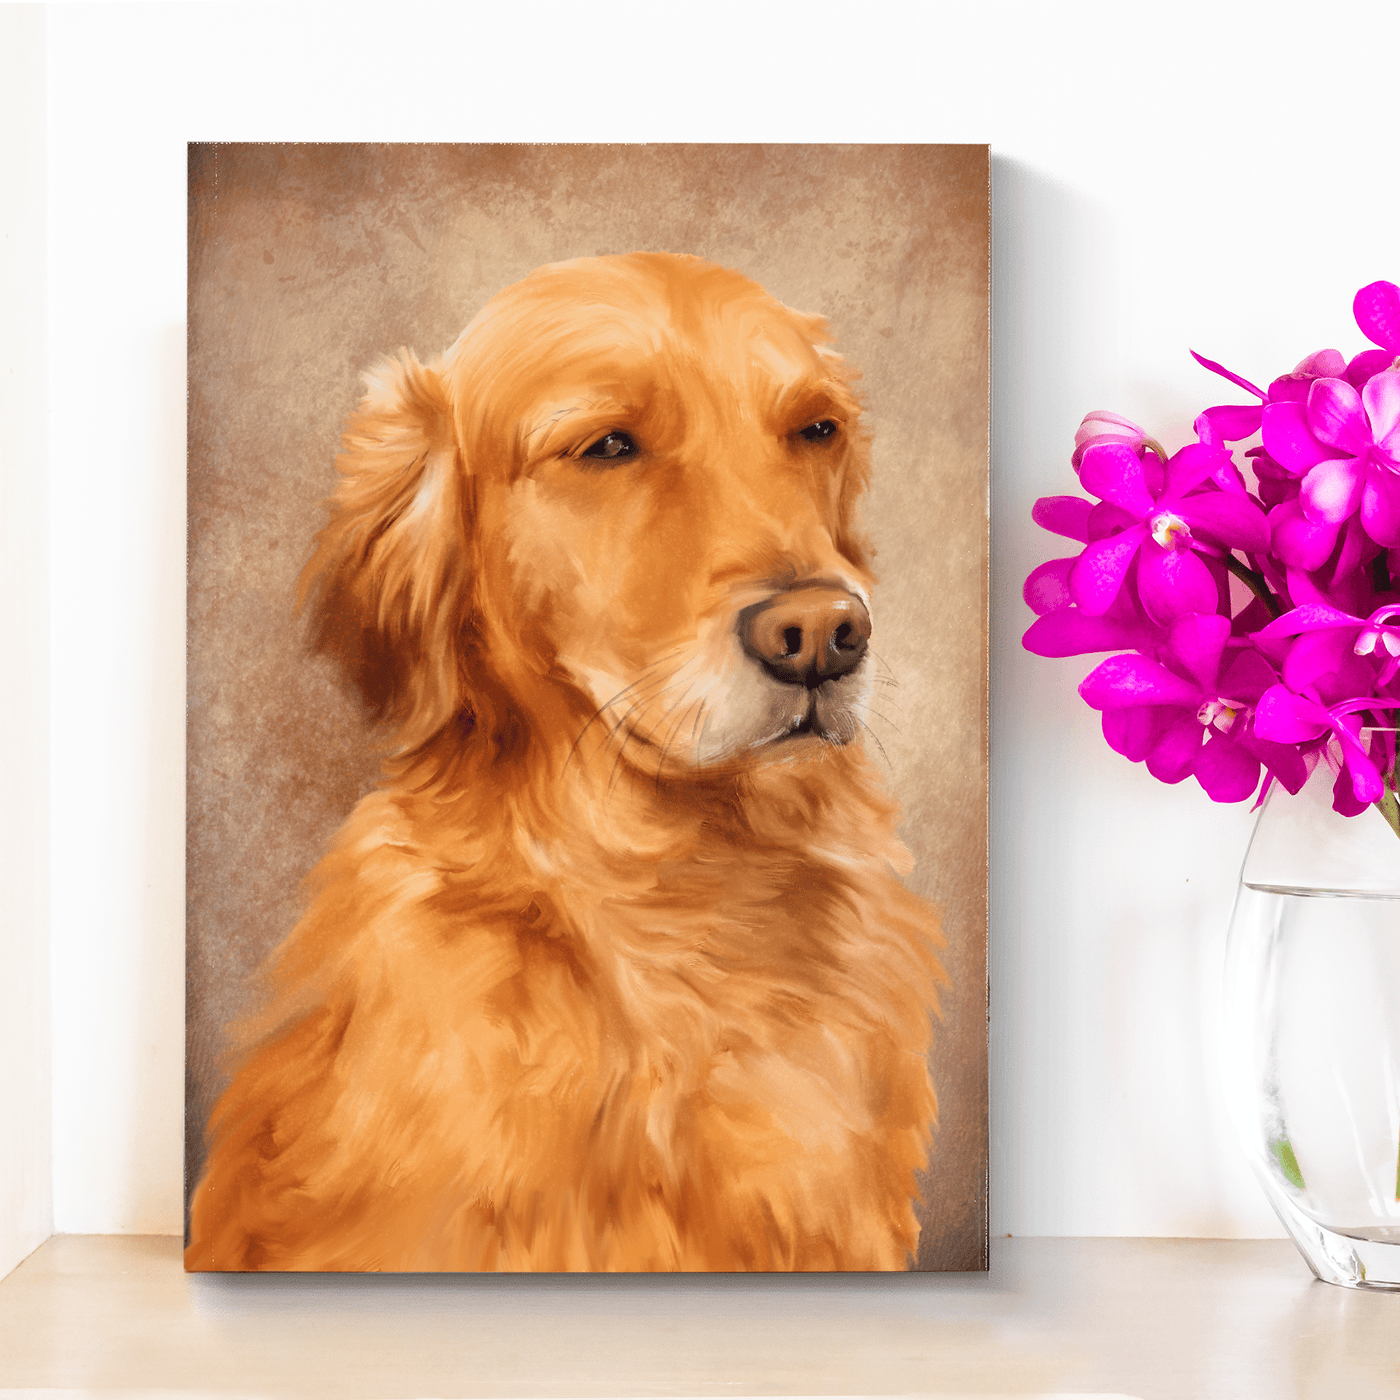 acrylic dog painting of a hairy breed dog with orange tones